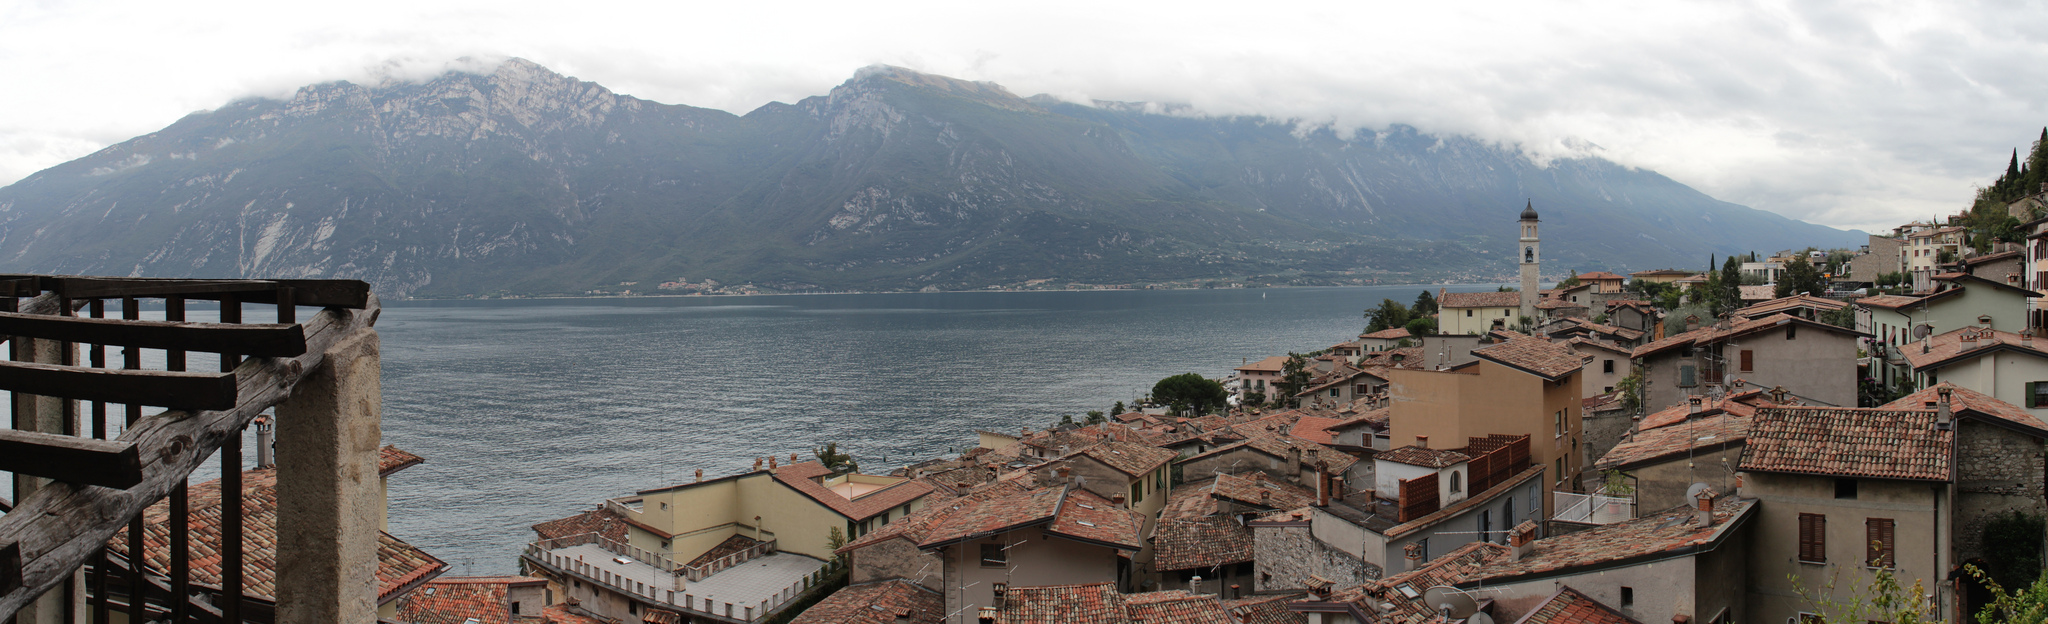 Panorama from Limone sul Garda - Italy